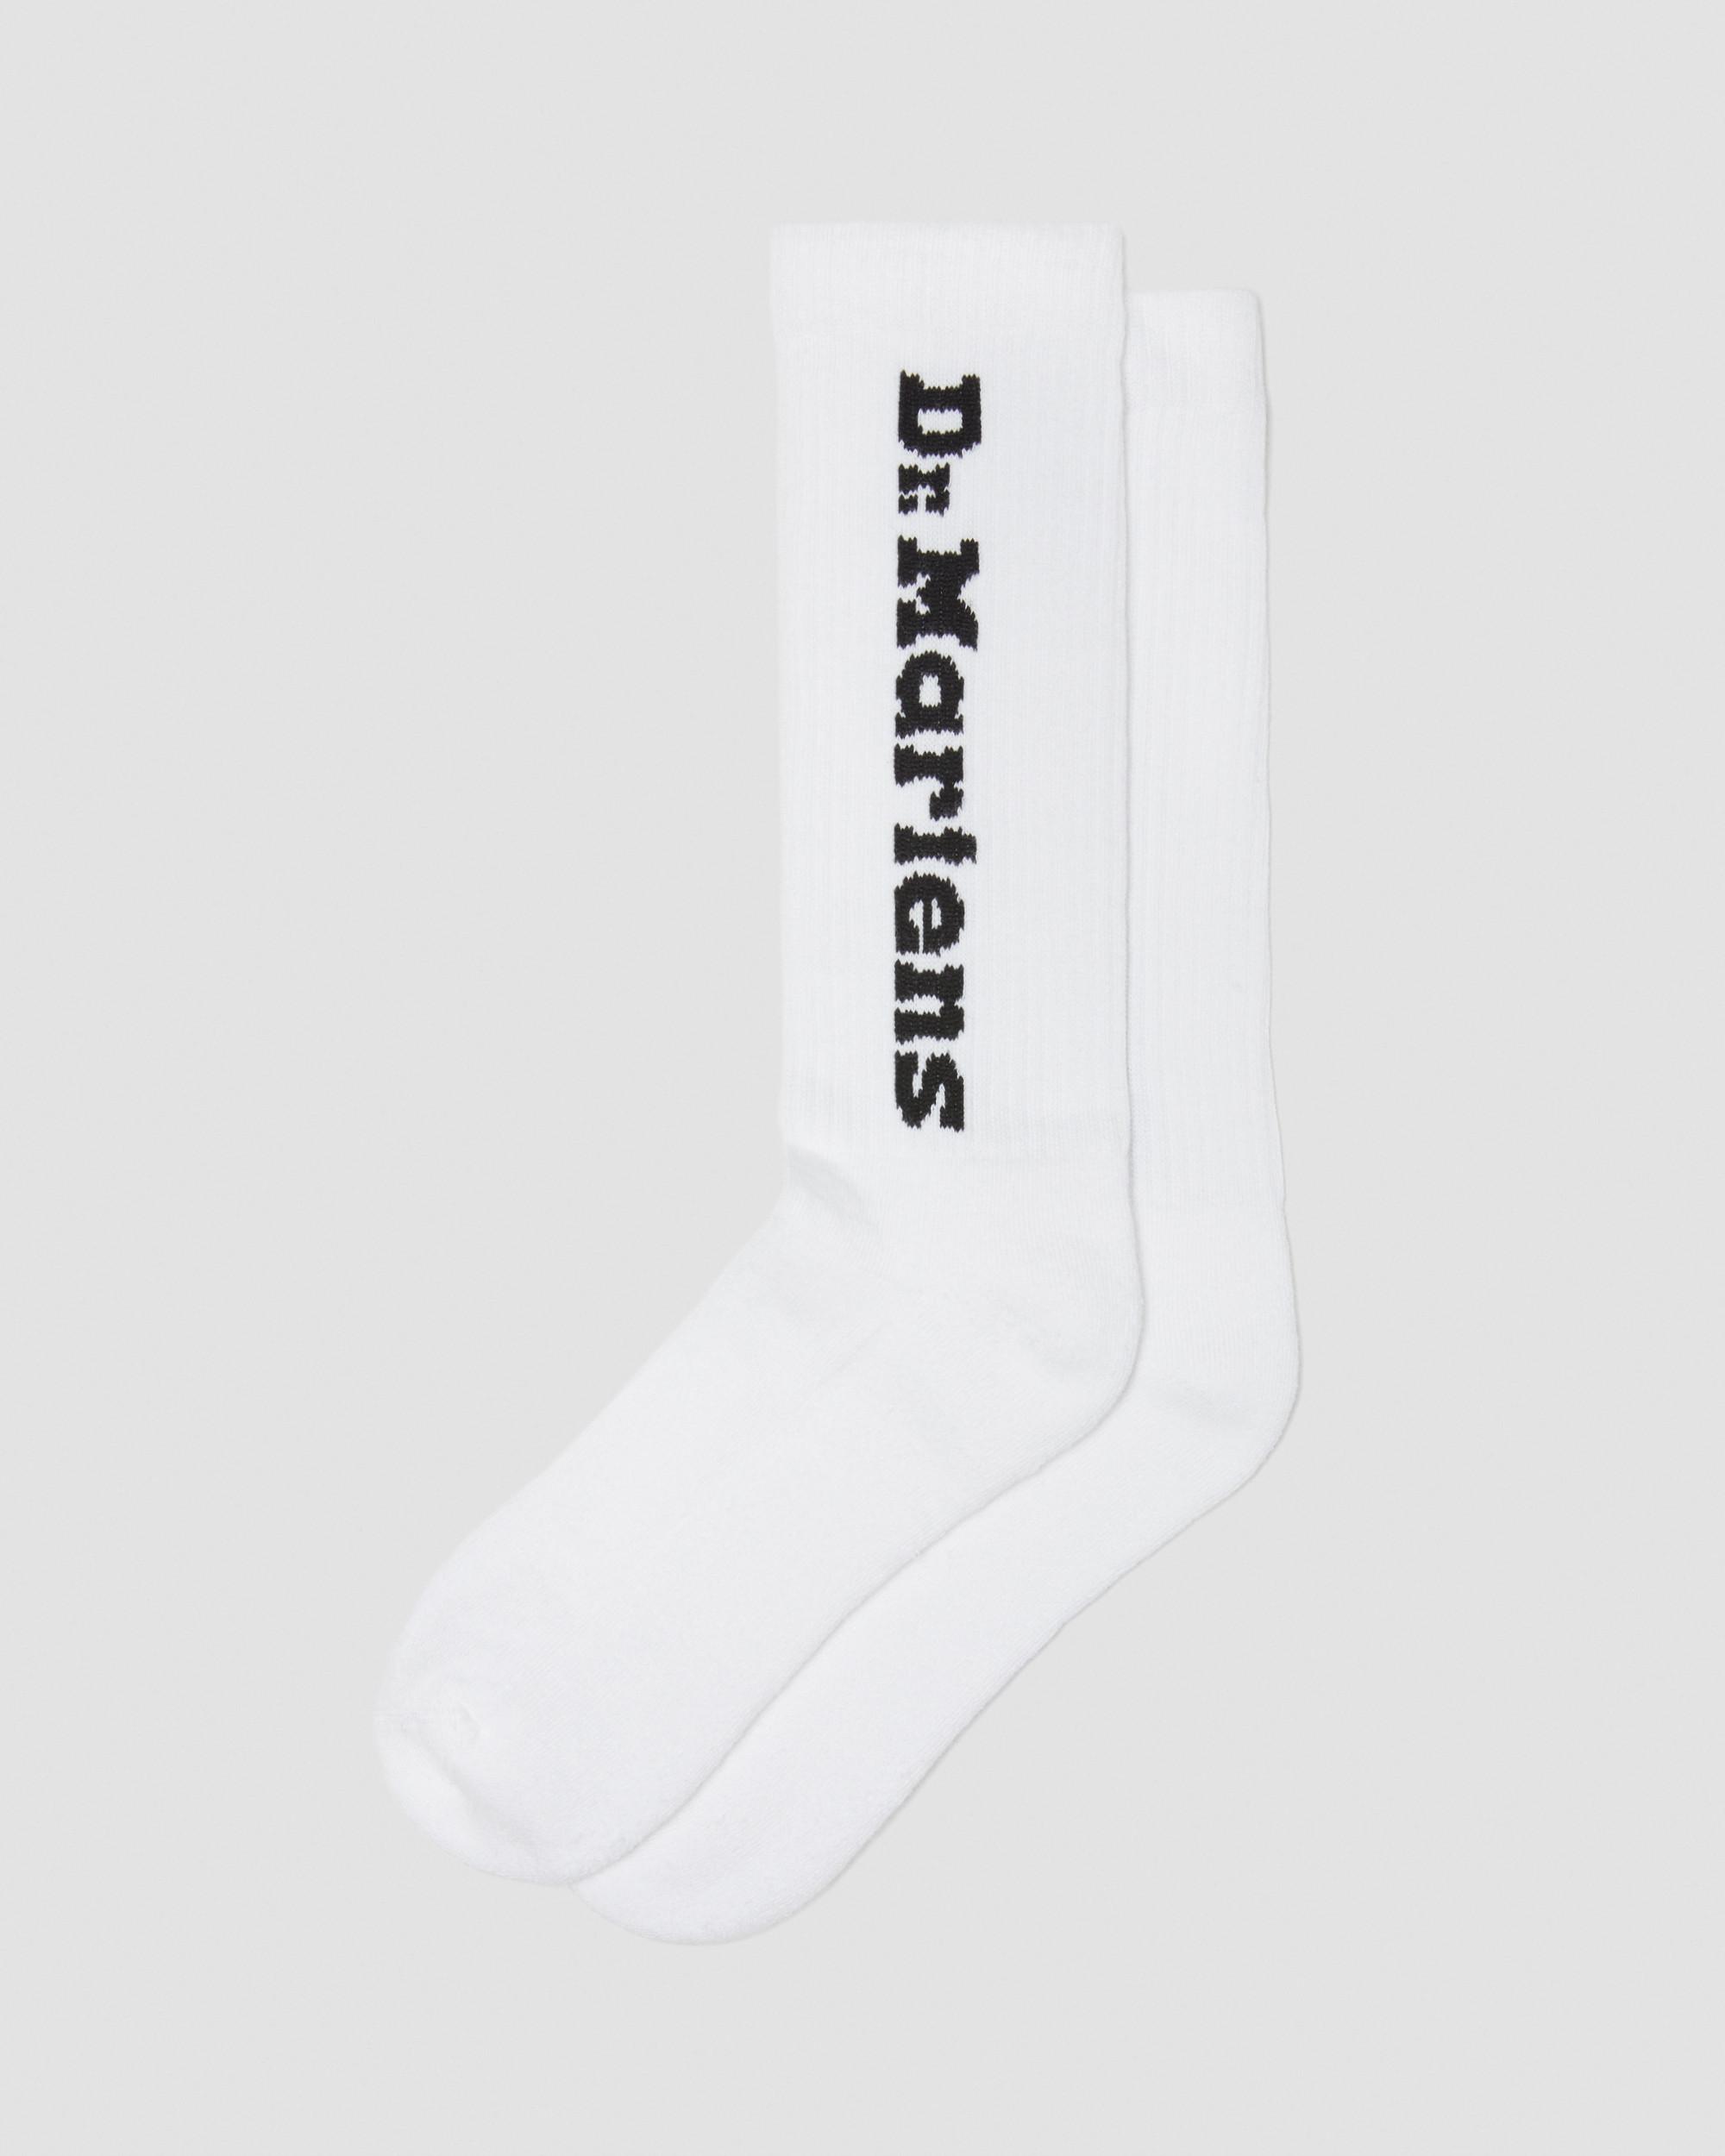 Vertical Logo Cotton Blend Socks in Black